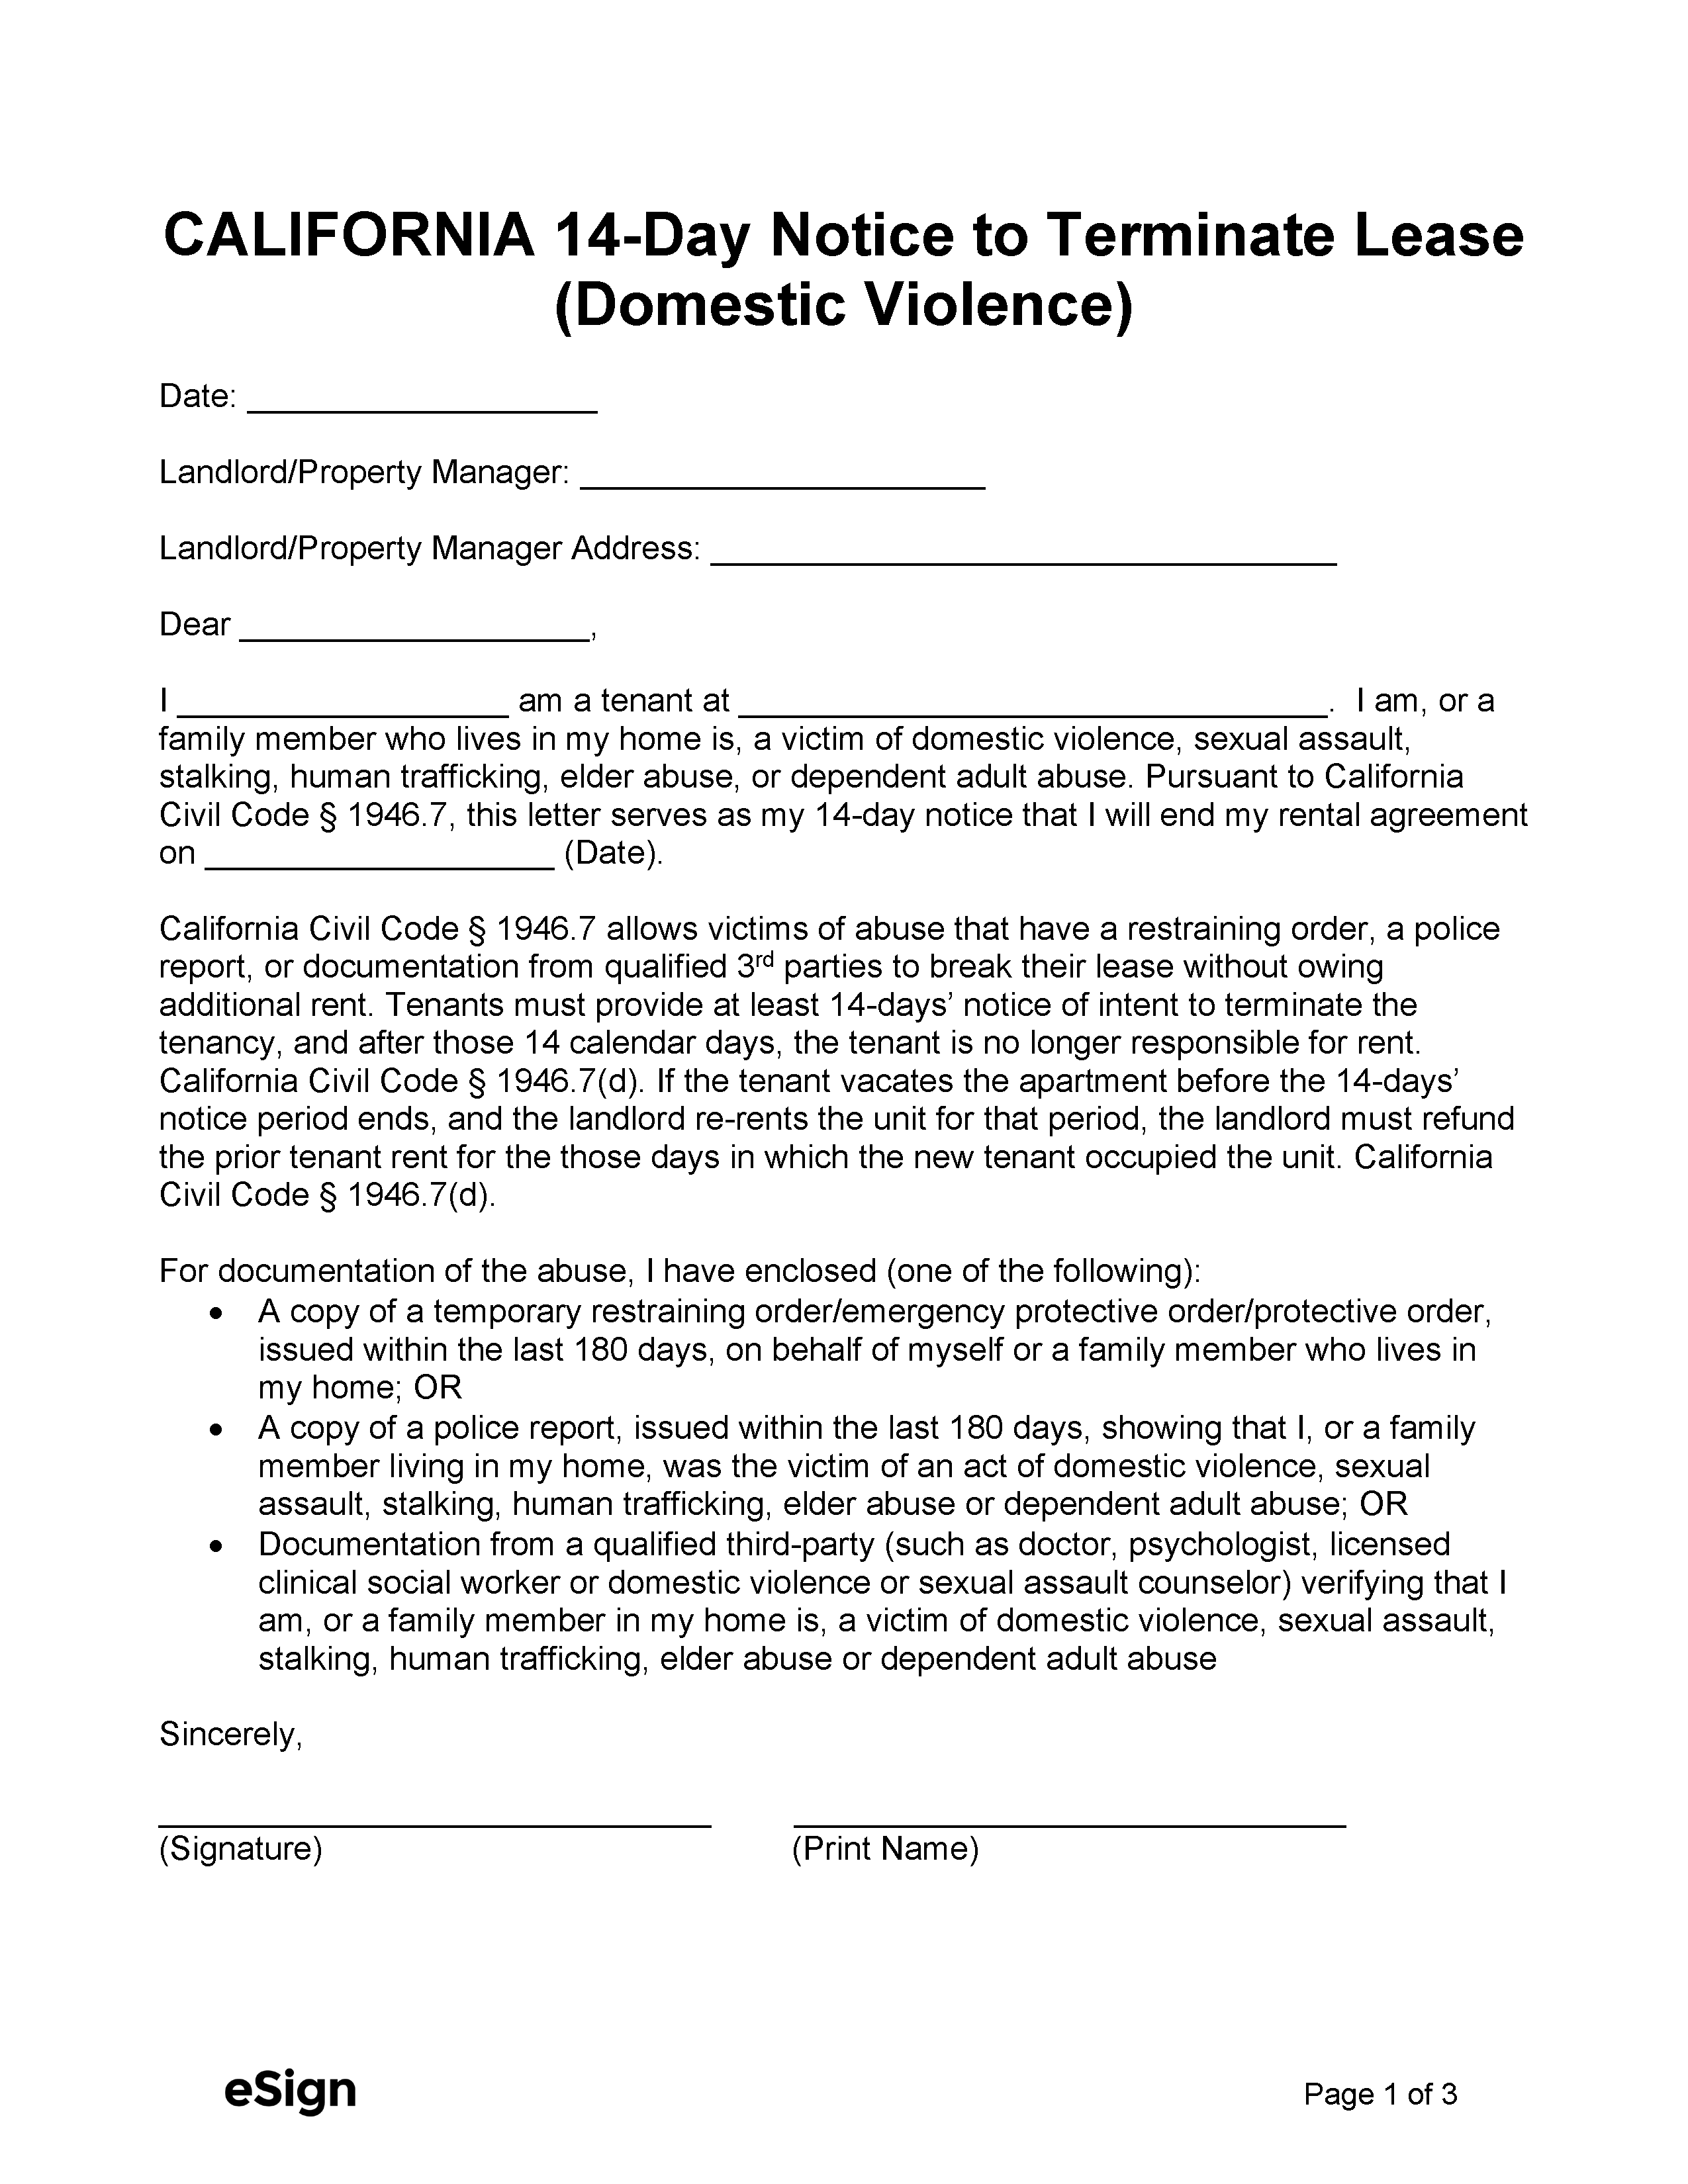 Free California 14 Day Notice to Terminate Domestic Violence PDF